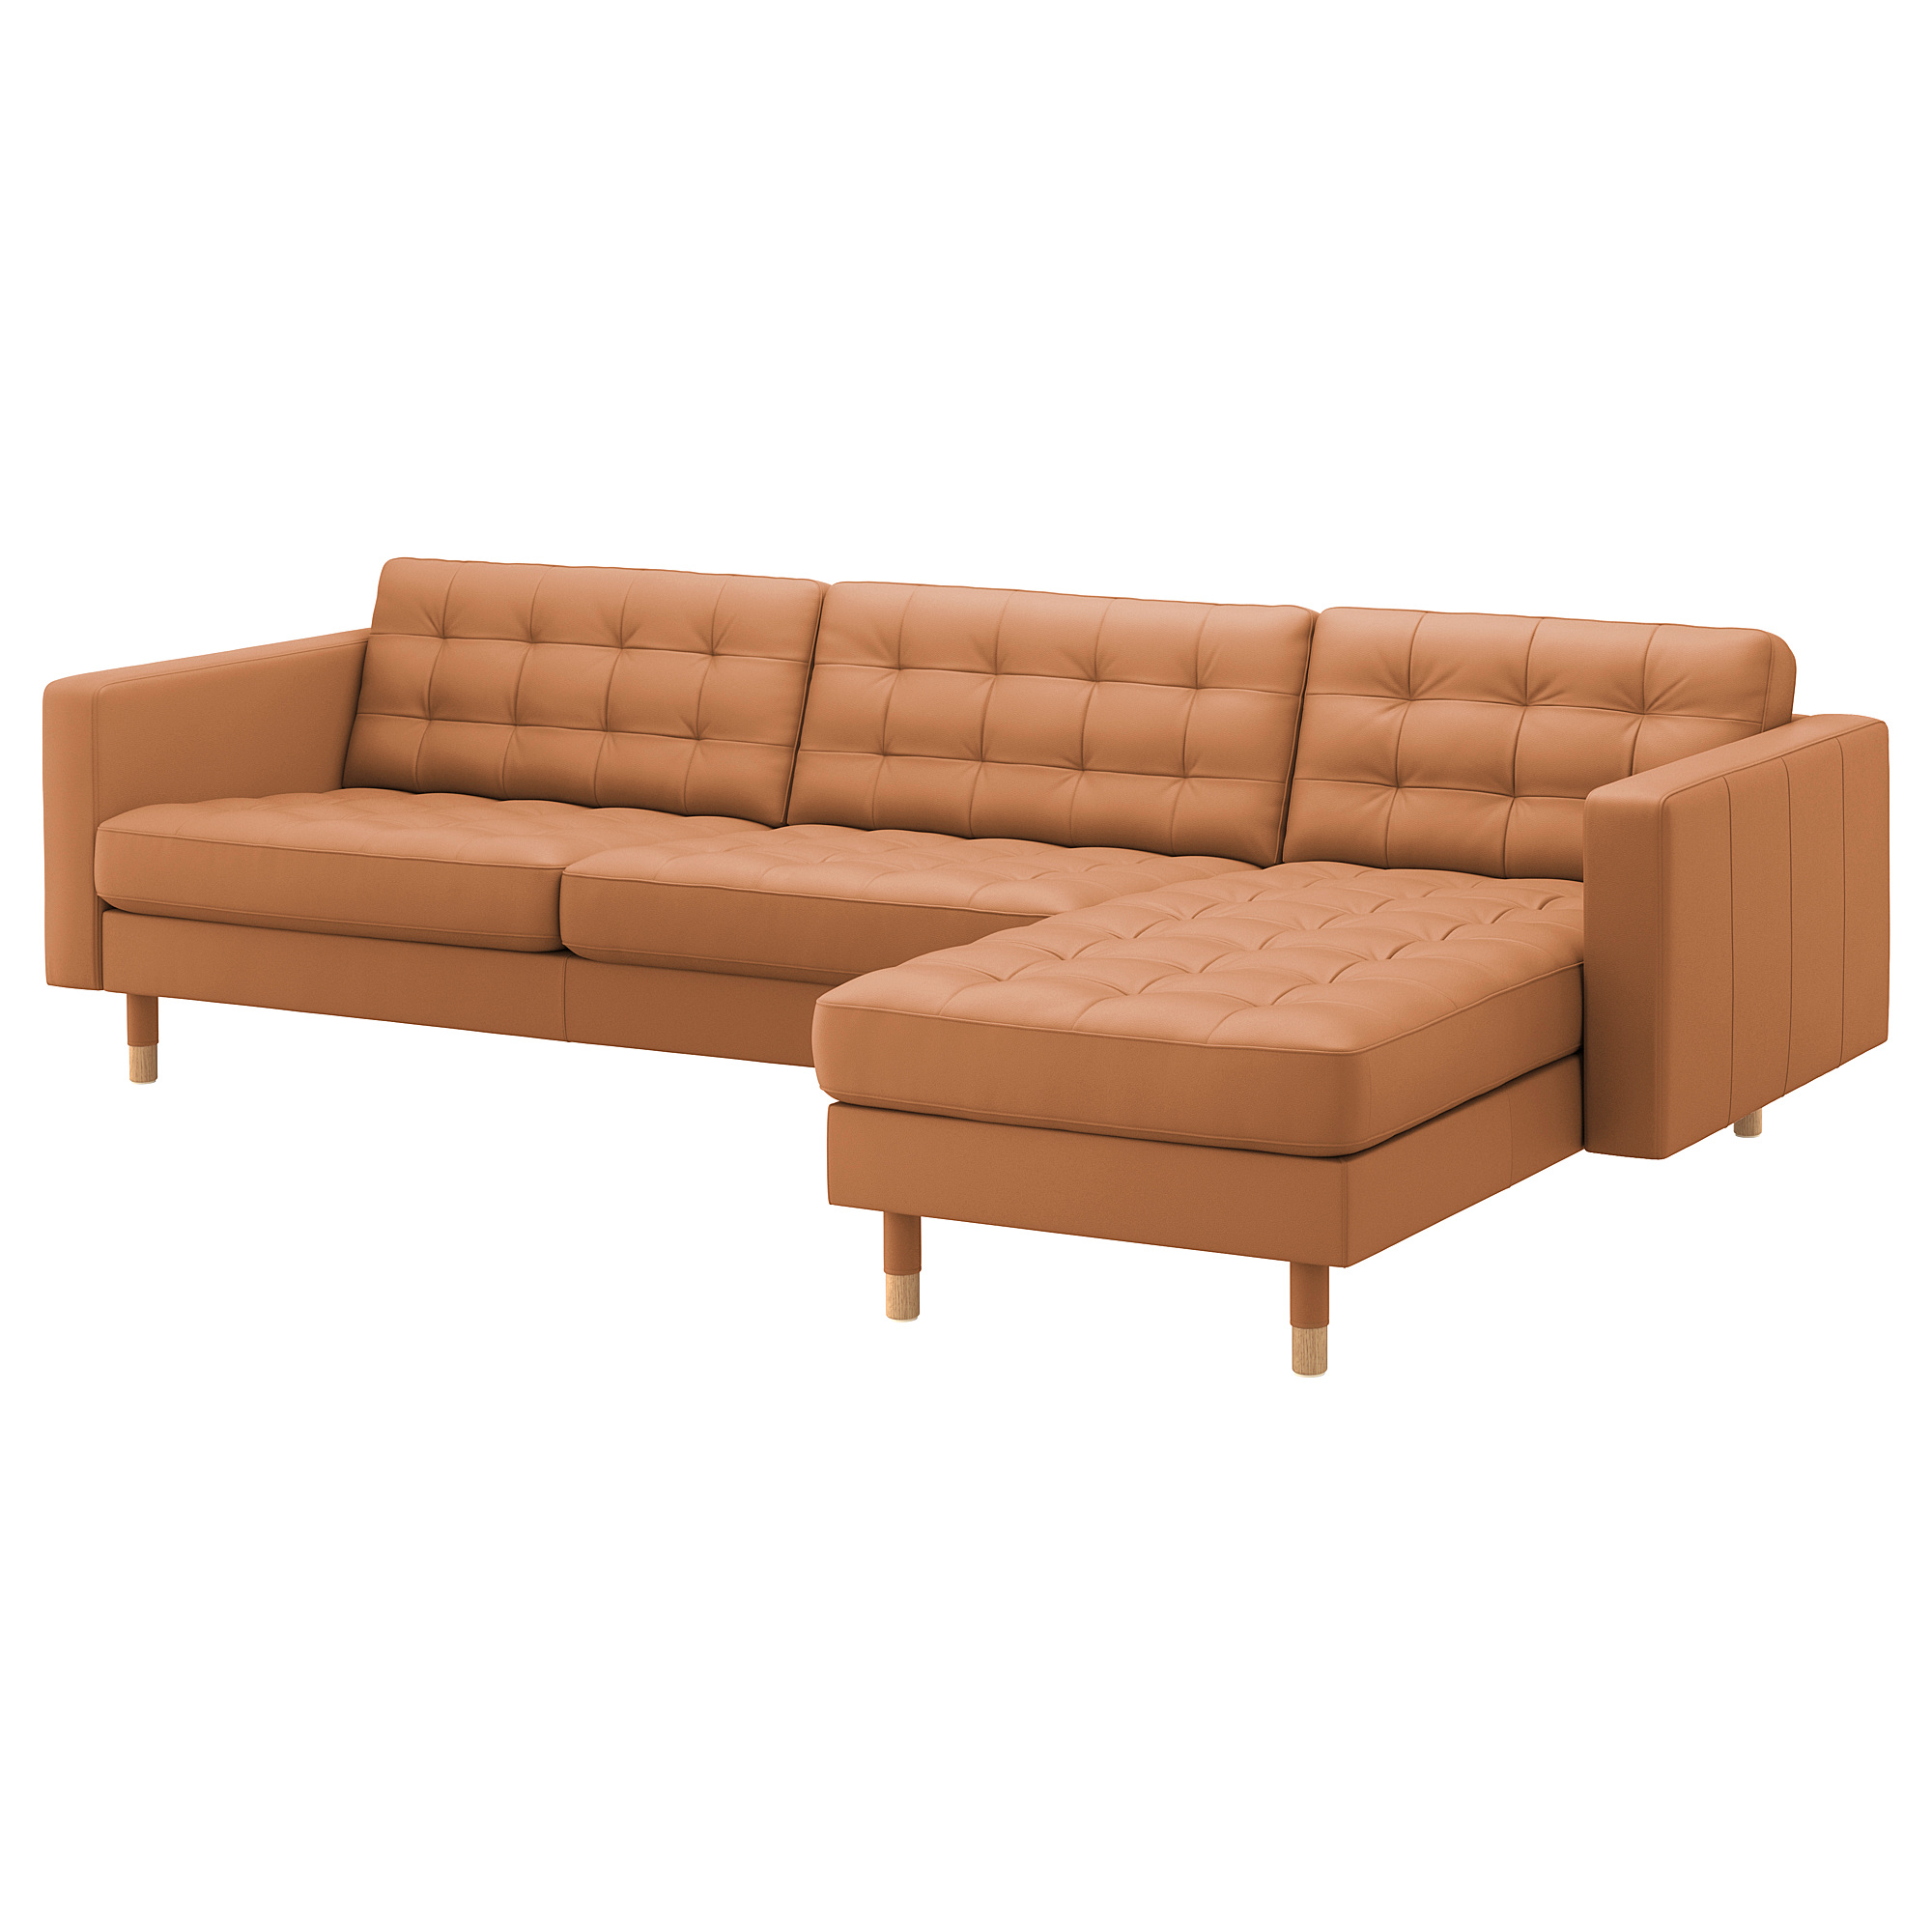 LANDSKRONA 4-seat sofa